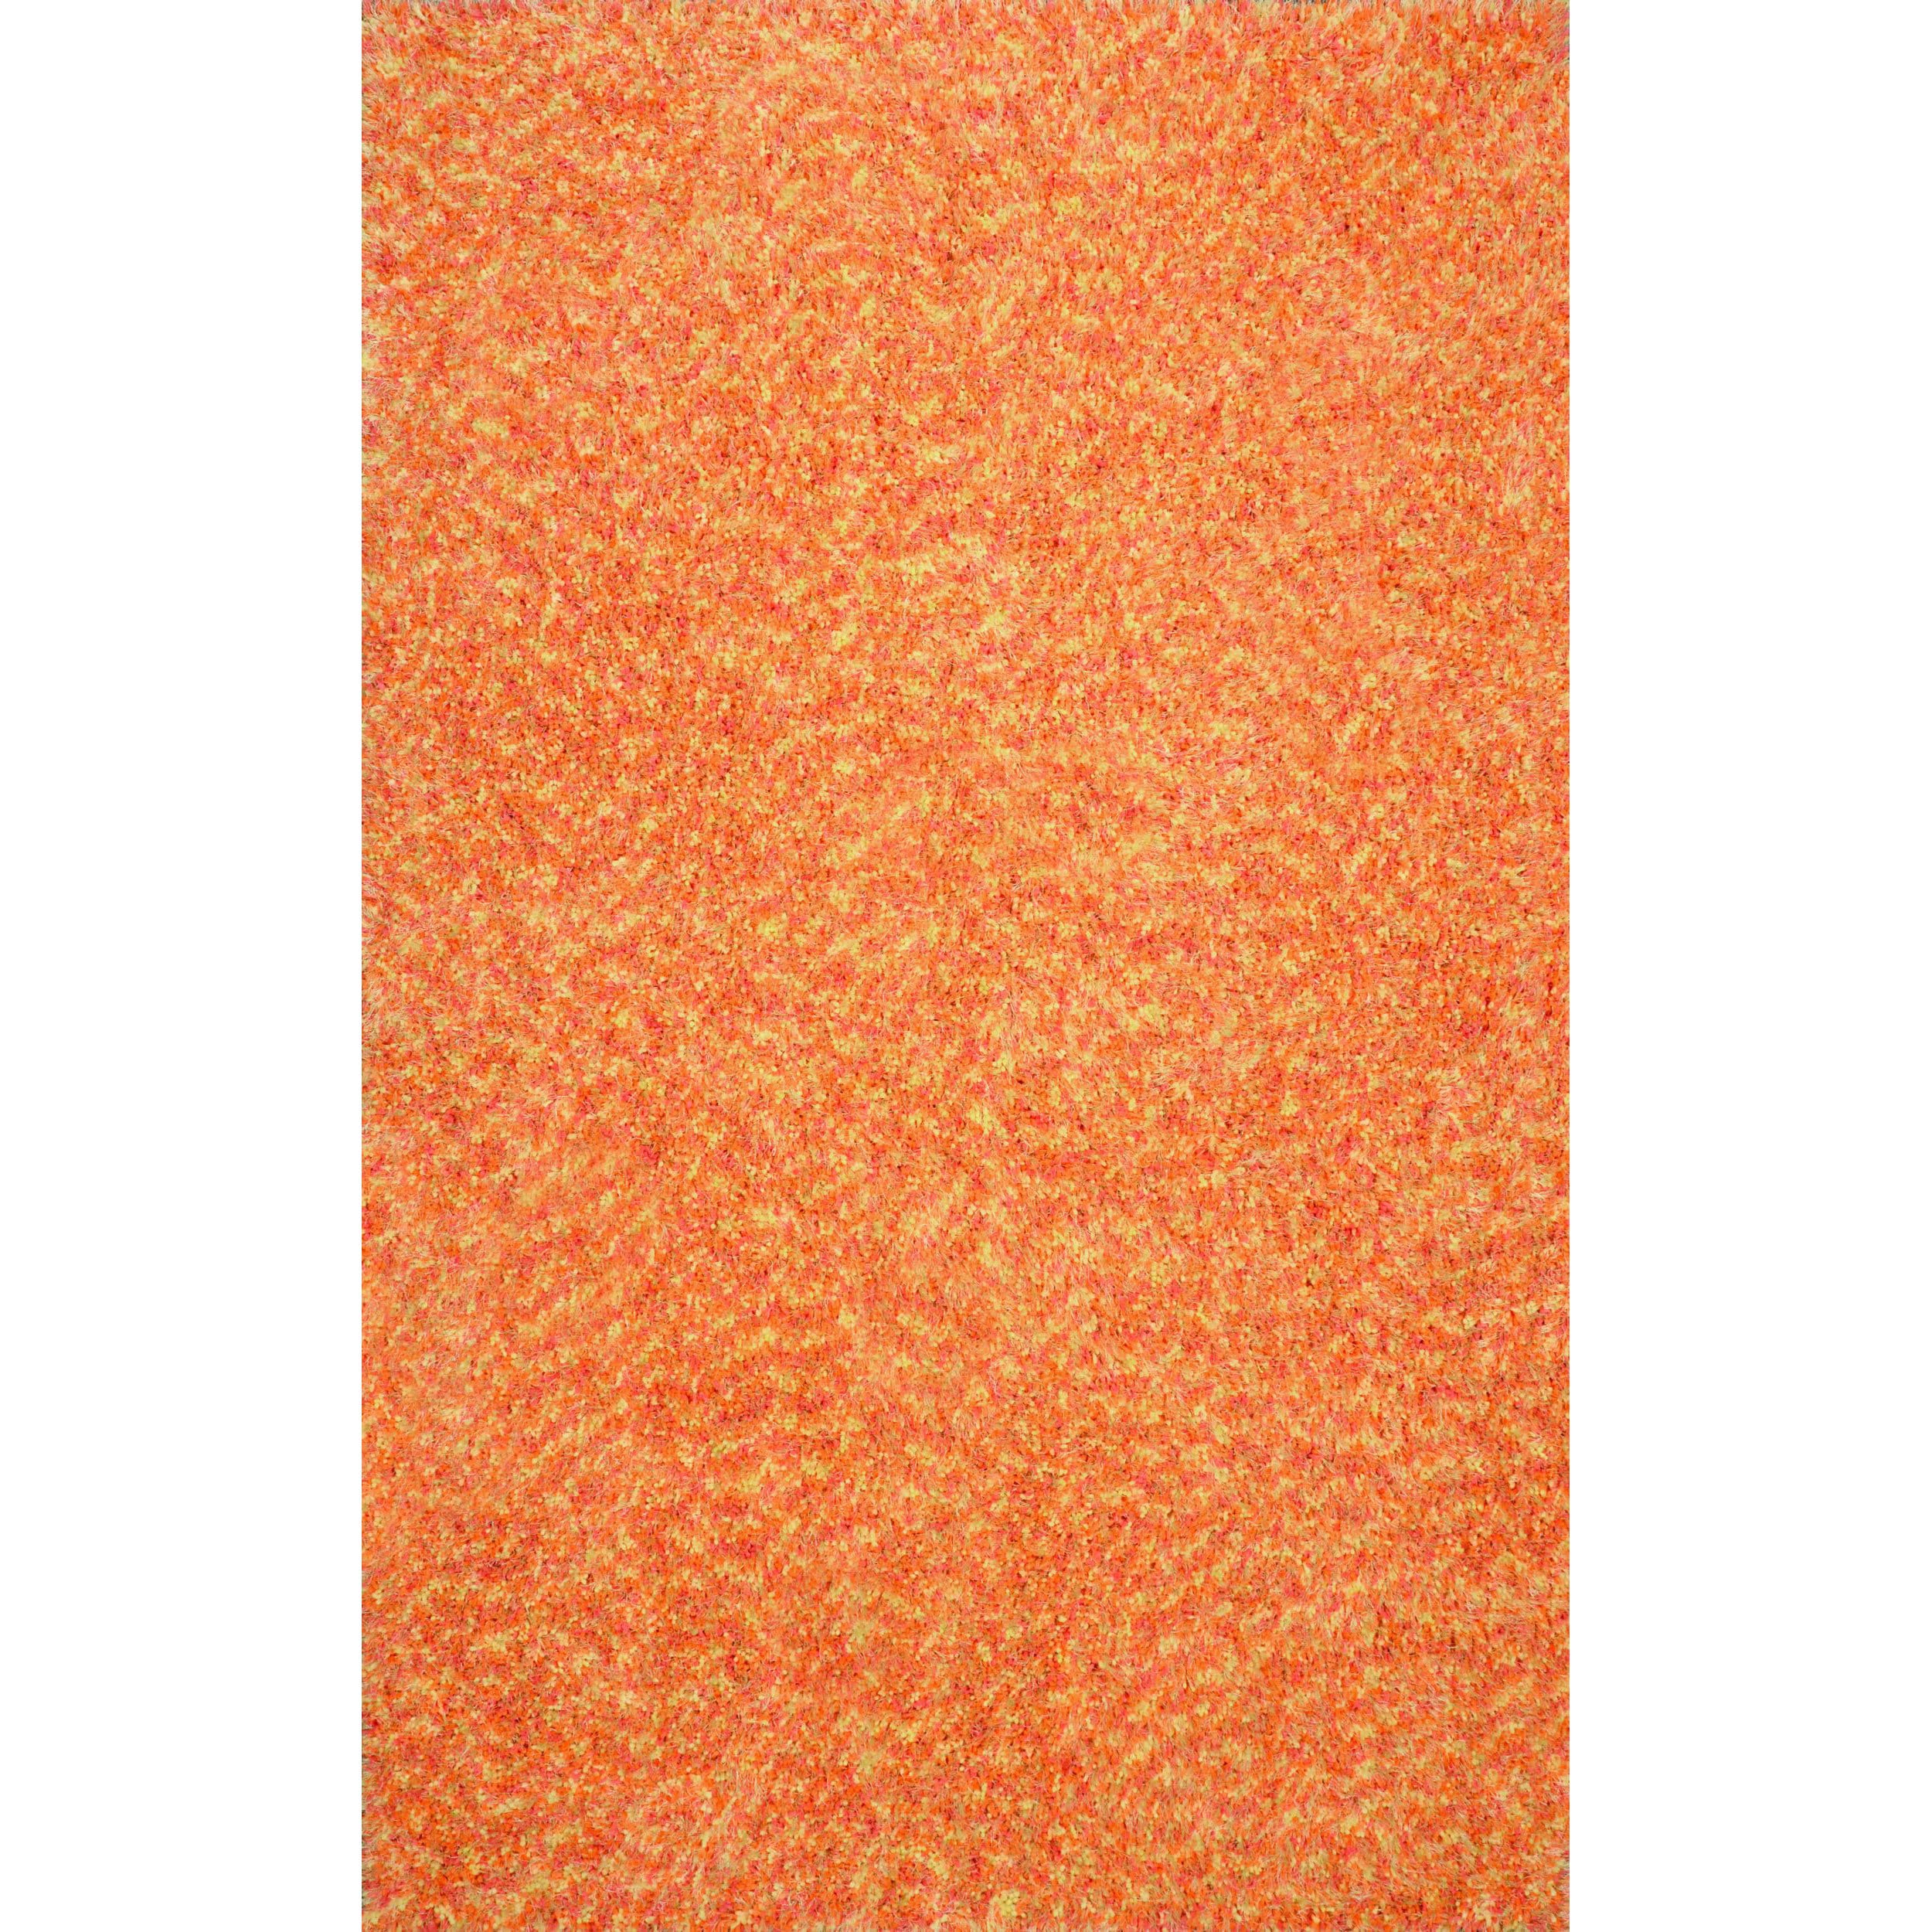 Nuloom Hand tufted Shag Orange Rug (7 6 X 9 6)